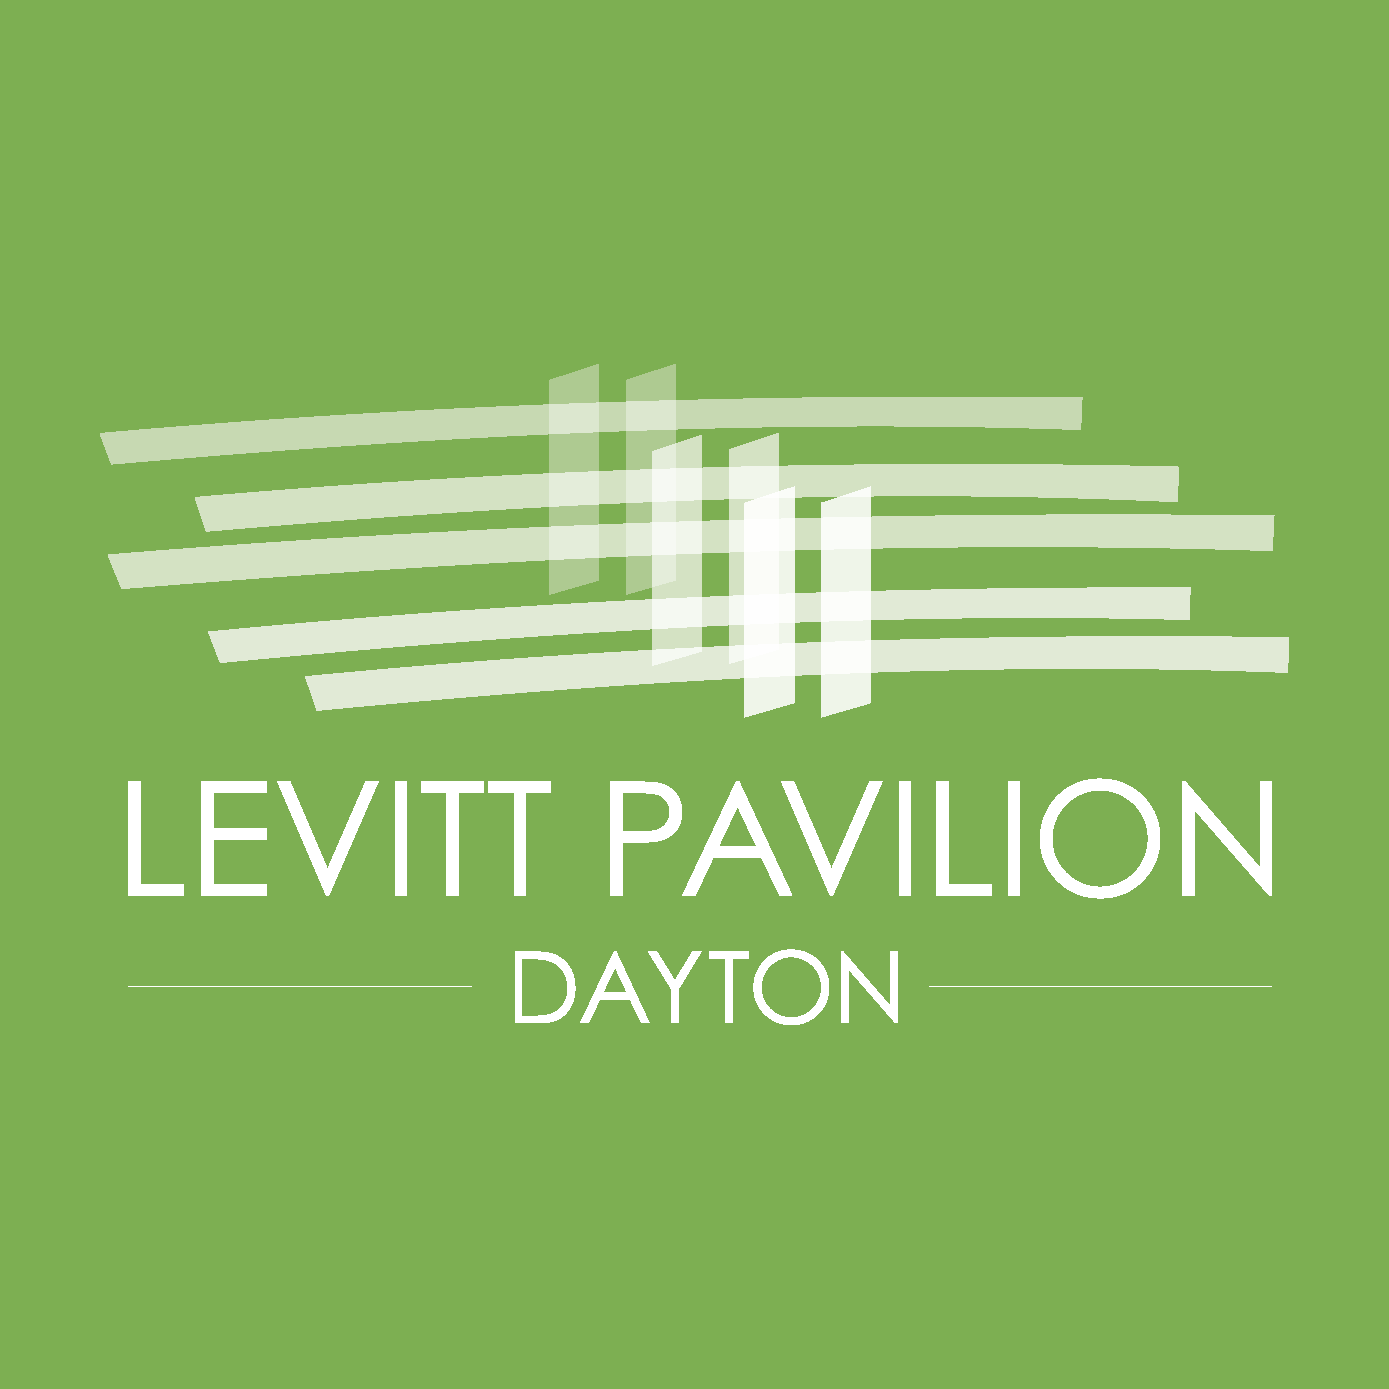 Media Kit Levitt Pavilion Dayton Logo white on green background